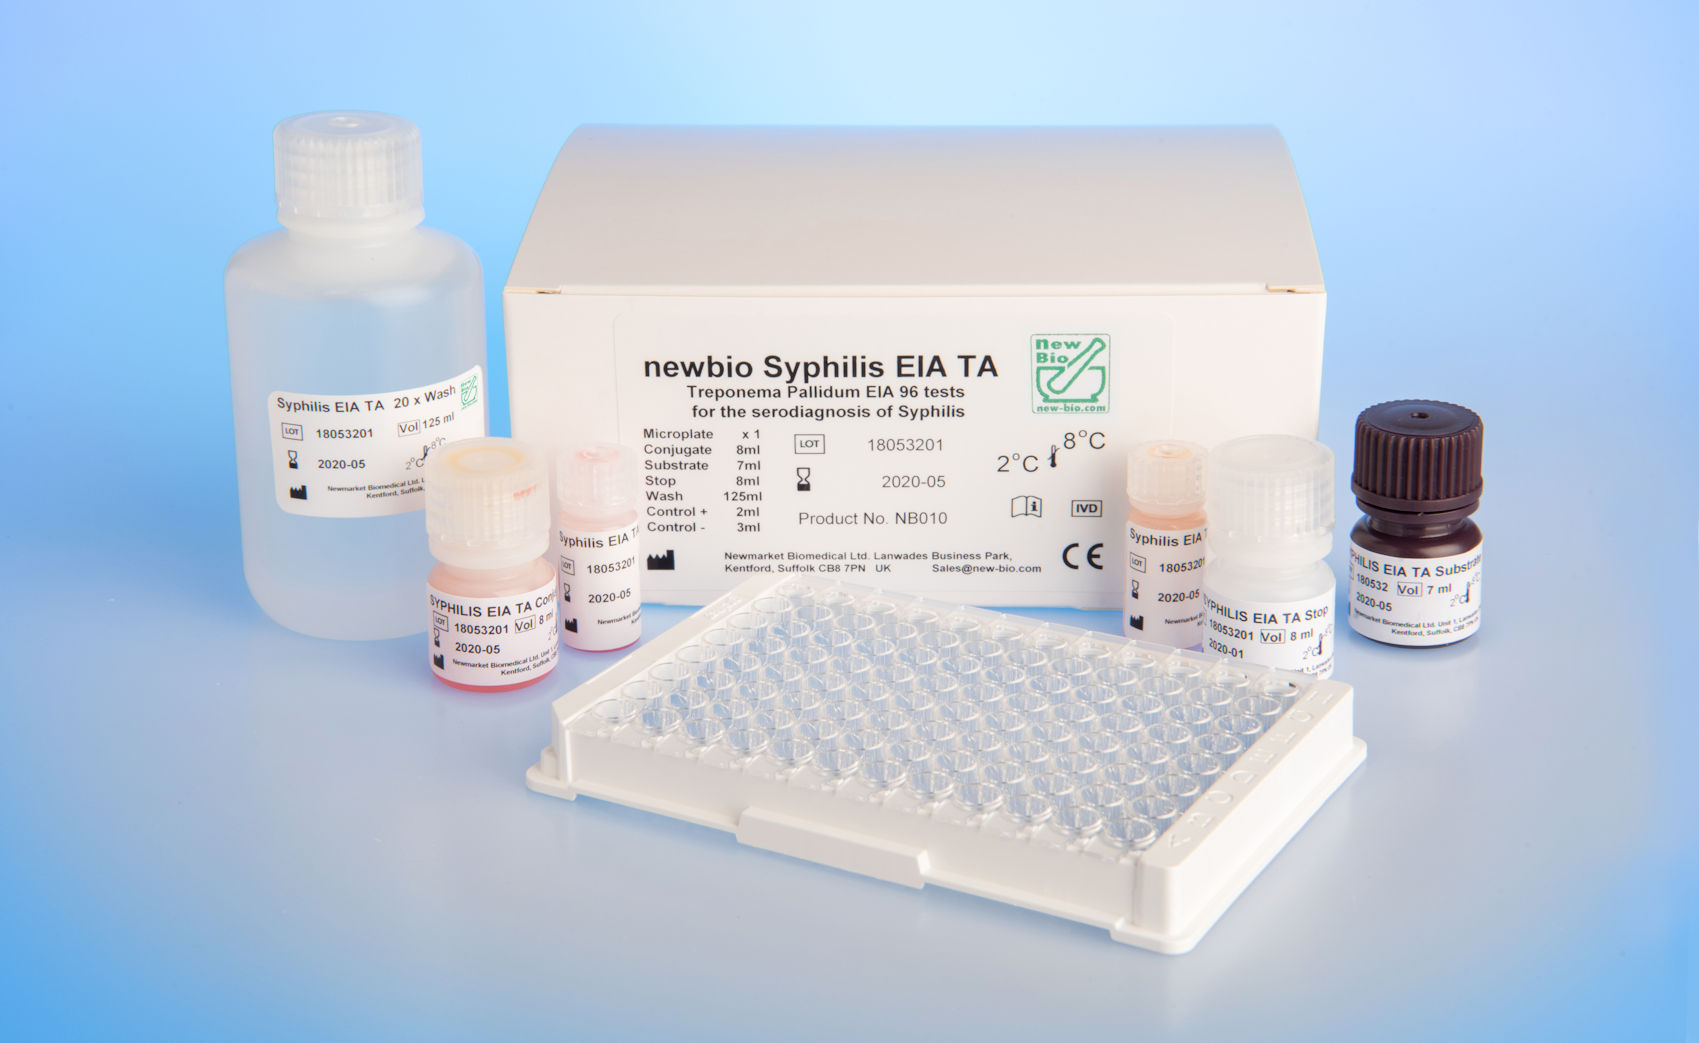 NewBio Syphilis EIA TA - Treponema Pallidum EIA 96 Tests for the serodiagnosis of Syphilis